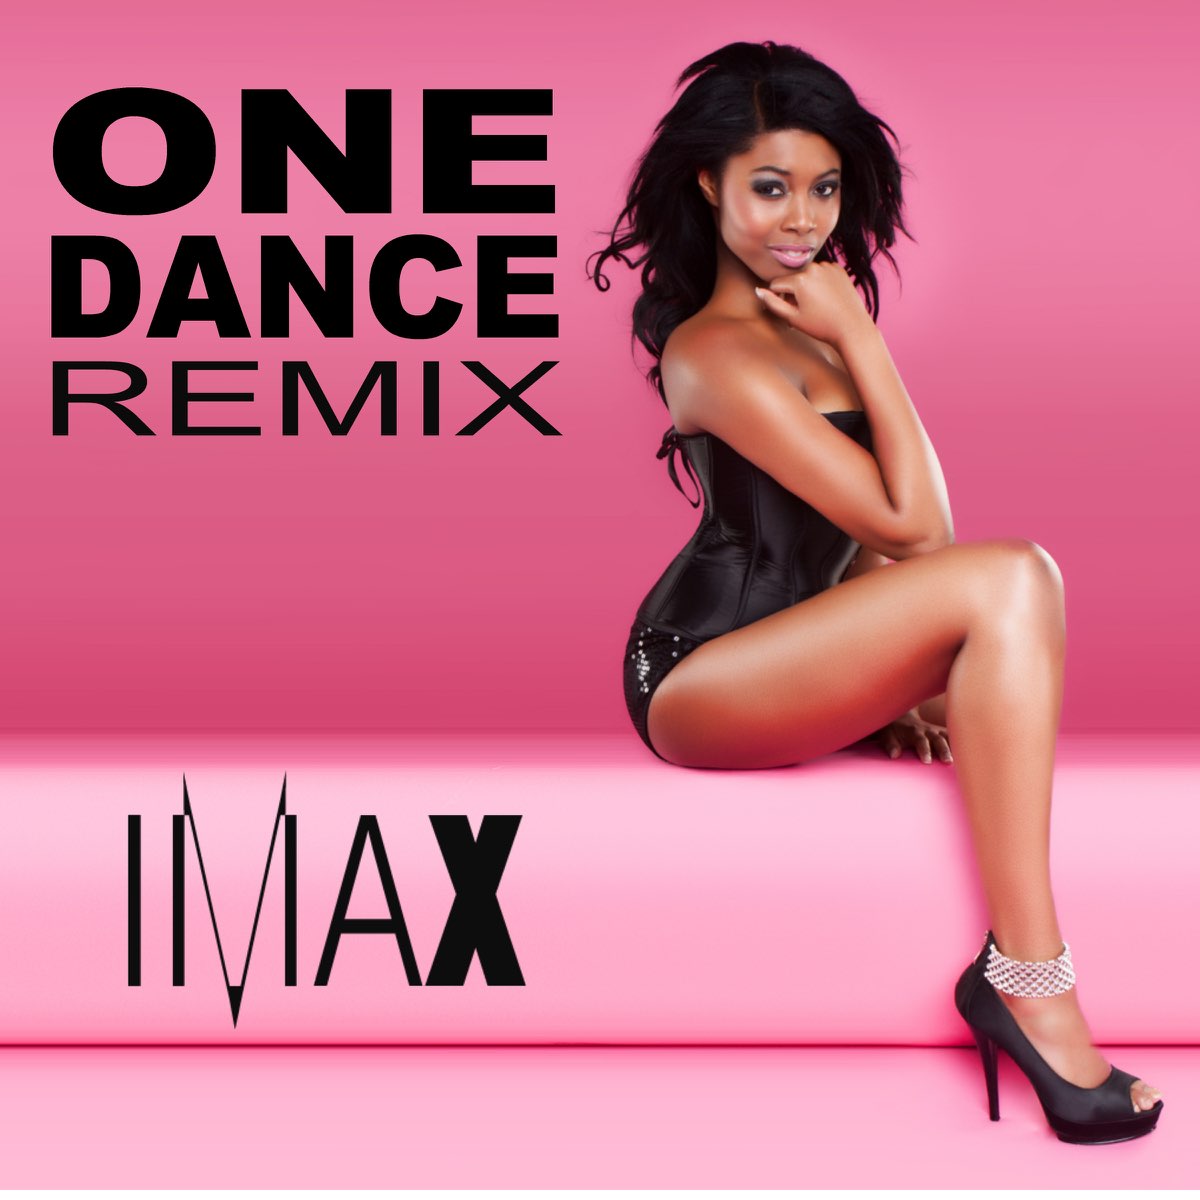 Summer dance remix. Rem Dance. Dance Remixes. Оне дэнс. One Dance Remix.